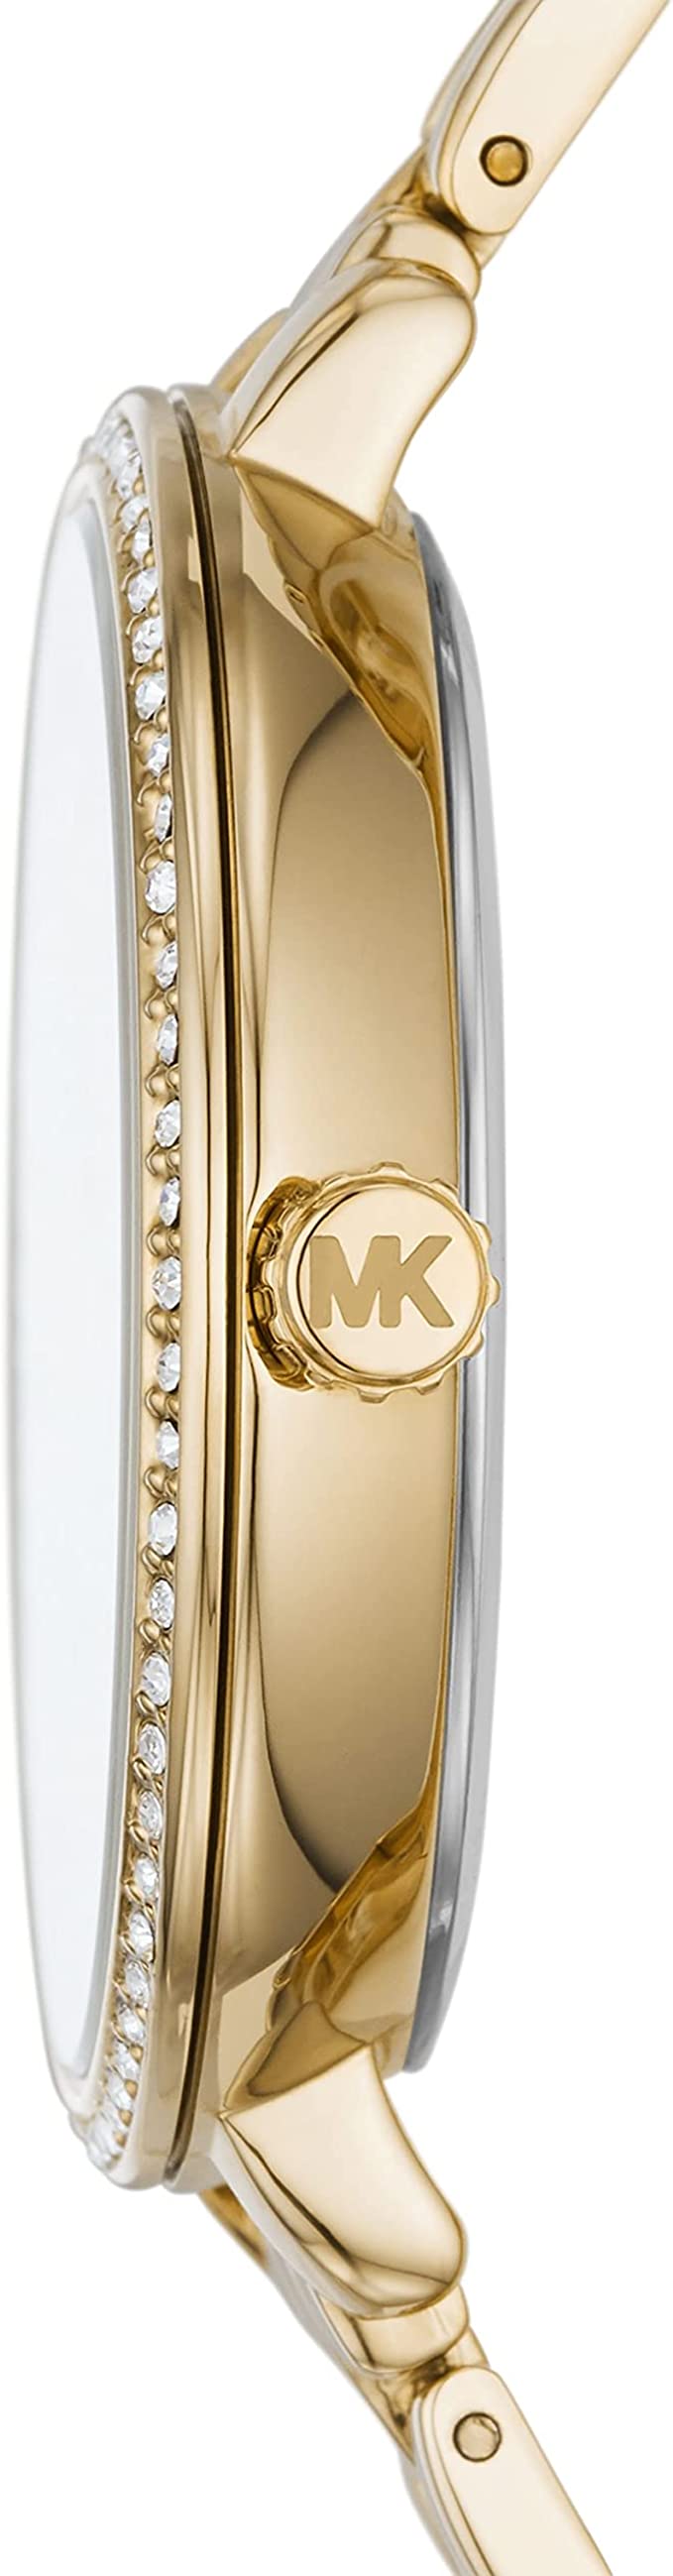 Reloj Michael Kors MK4399